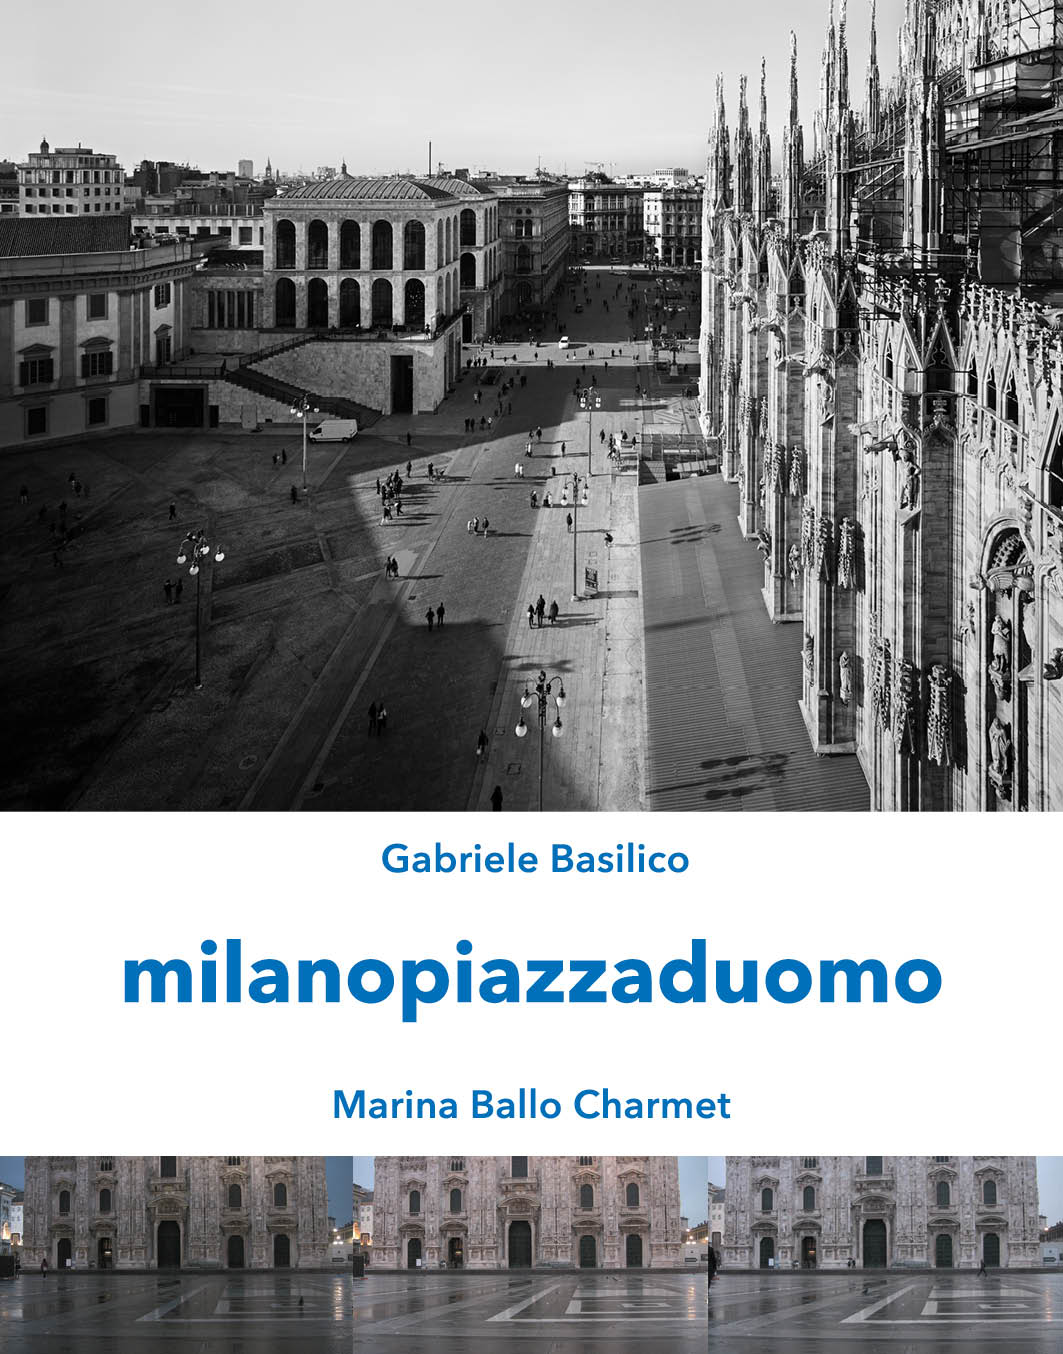 Marina Ballo Charmet / Gabriele Basilico – milanopiazzaduomo